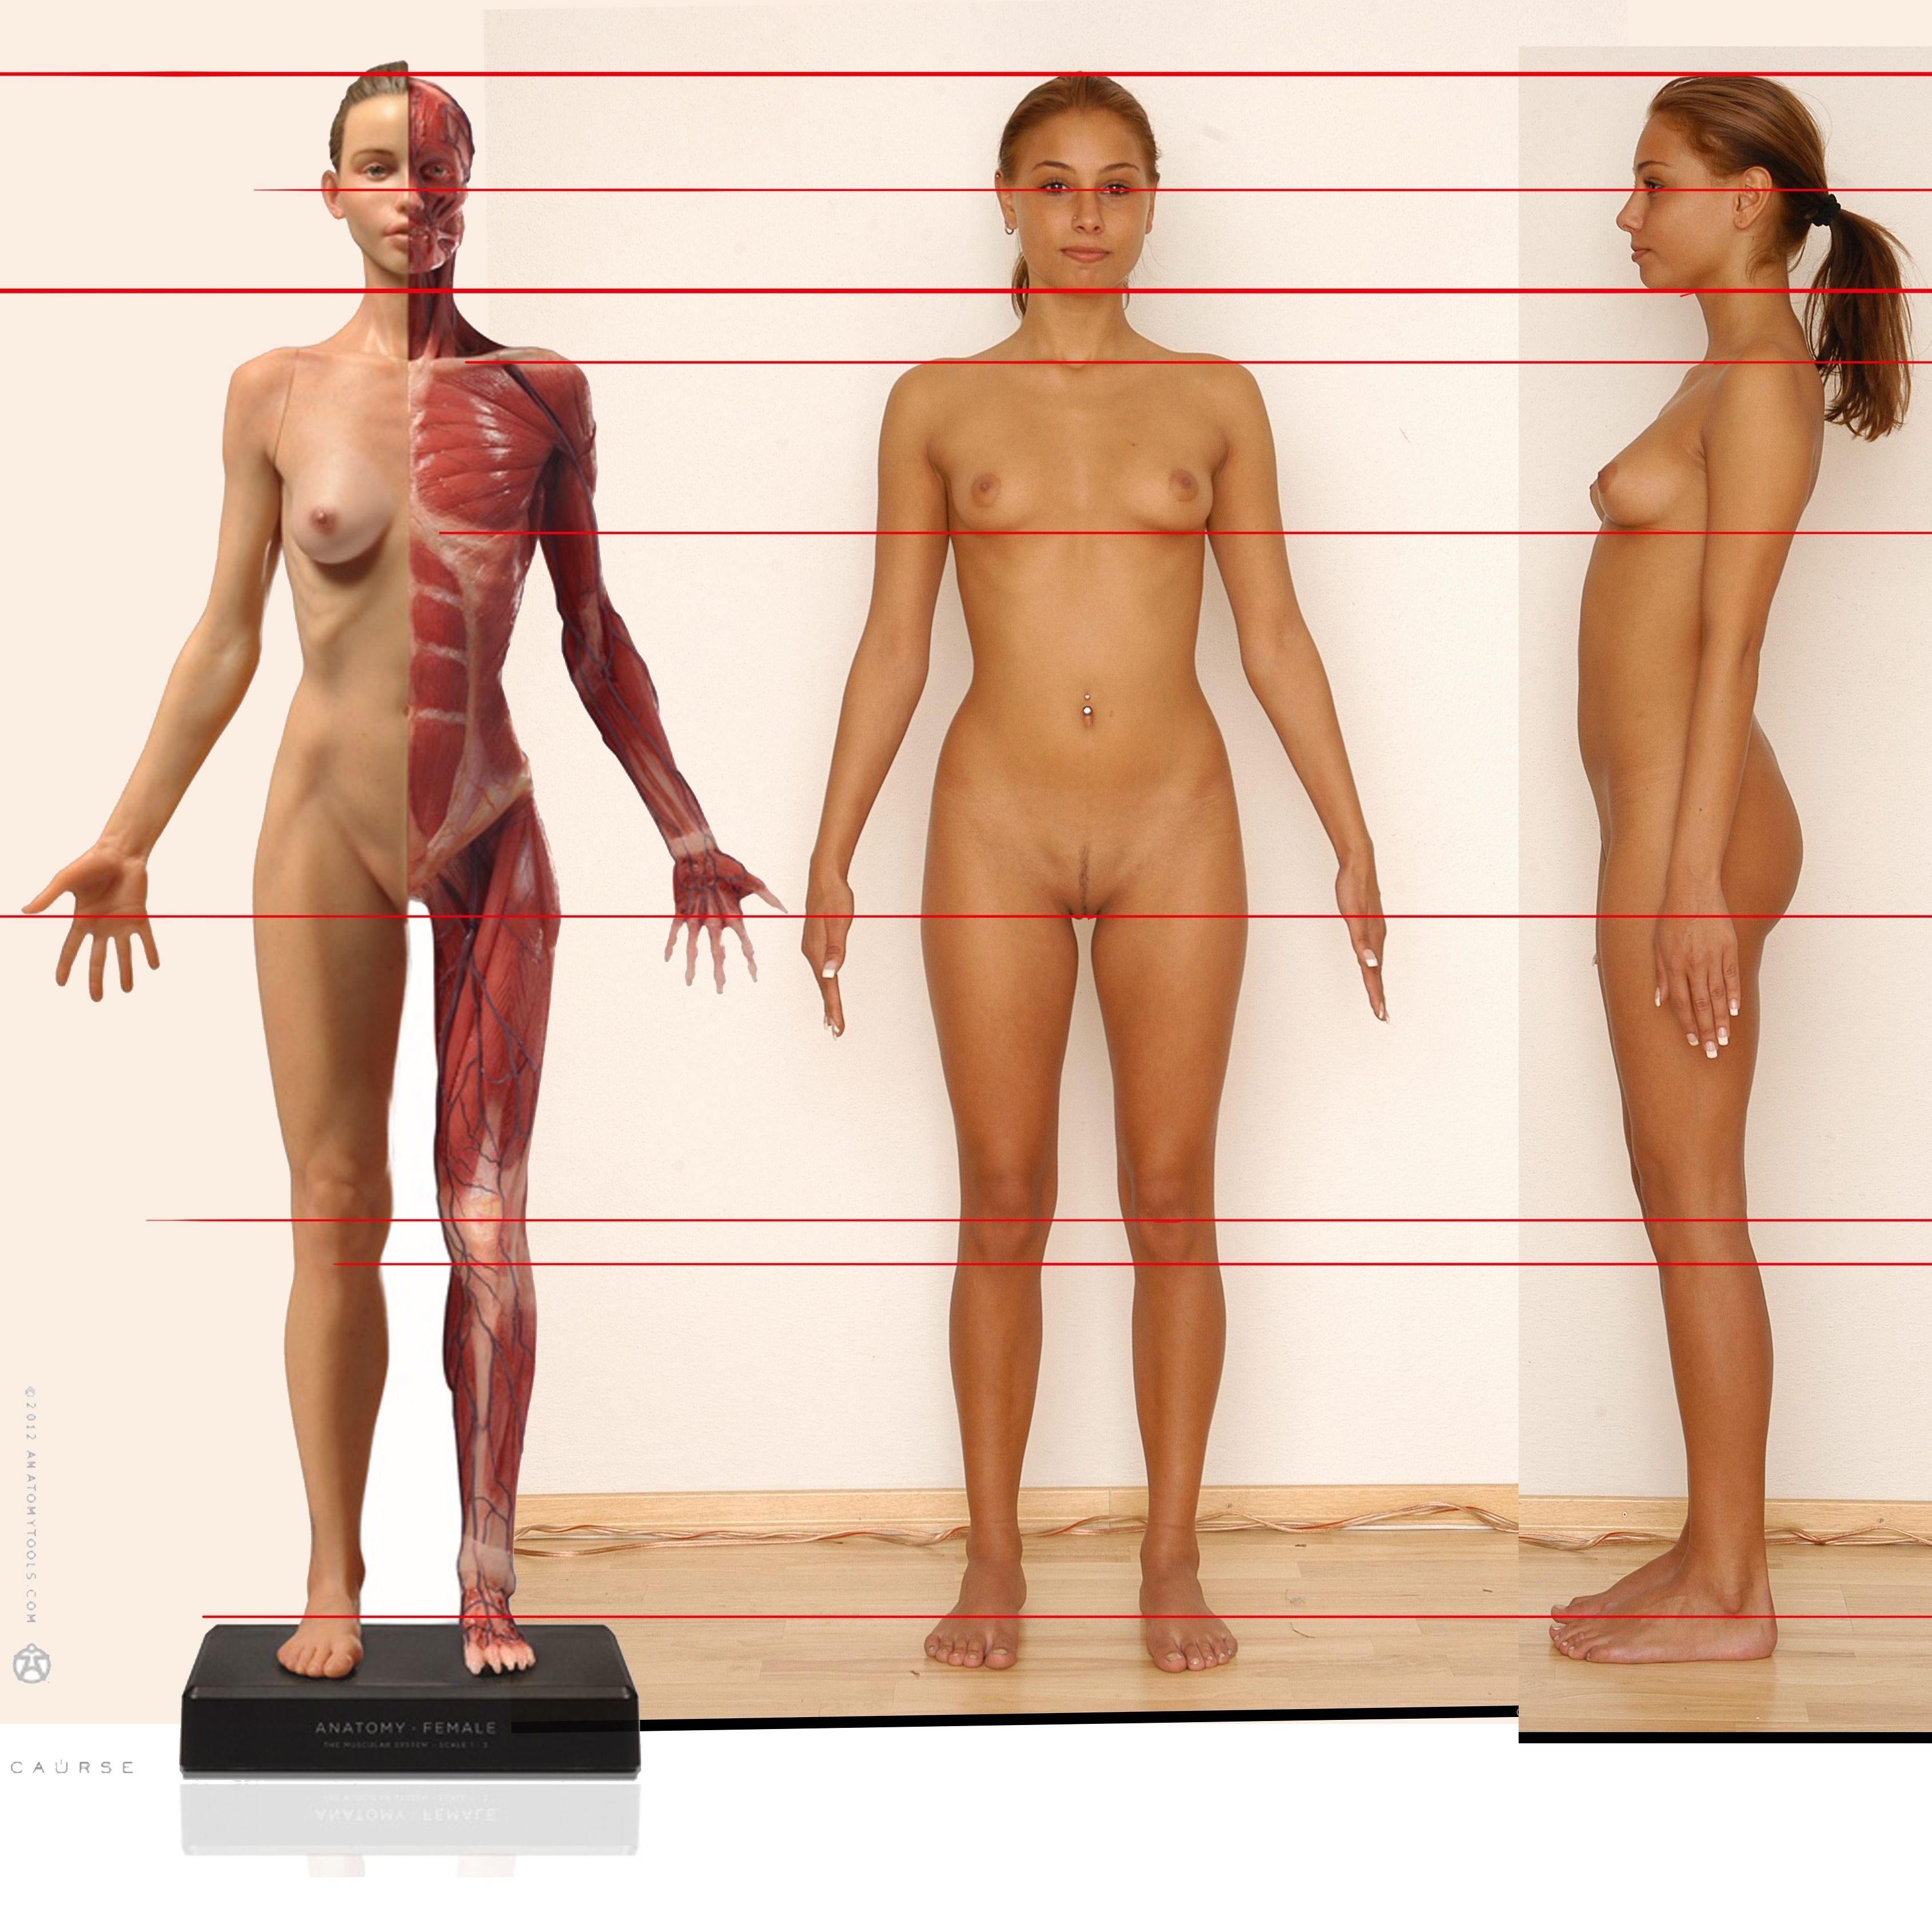 Anatomy lesson nude